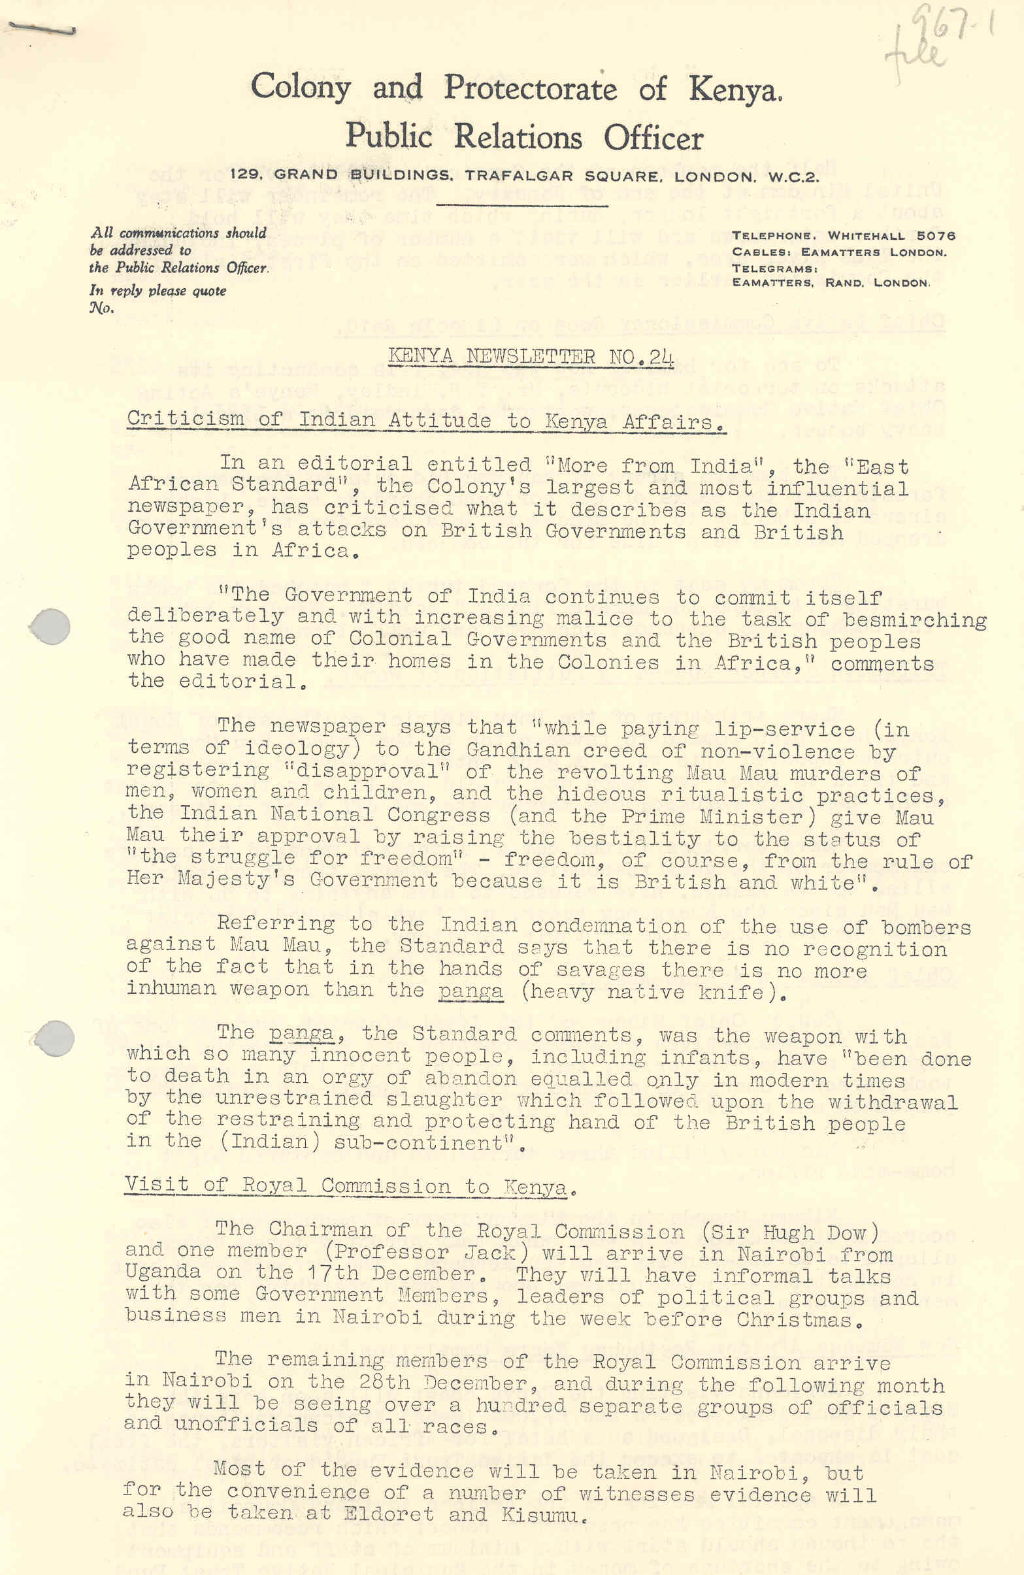 'Criticism of Indian attitude to Kenya affairs', 1953